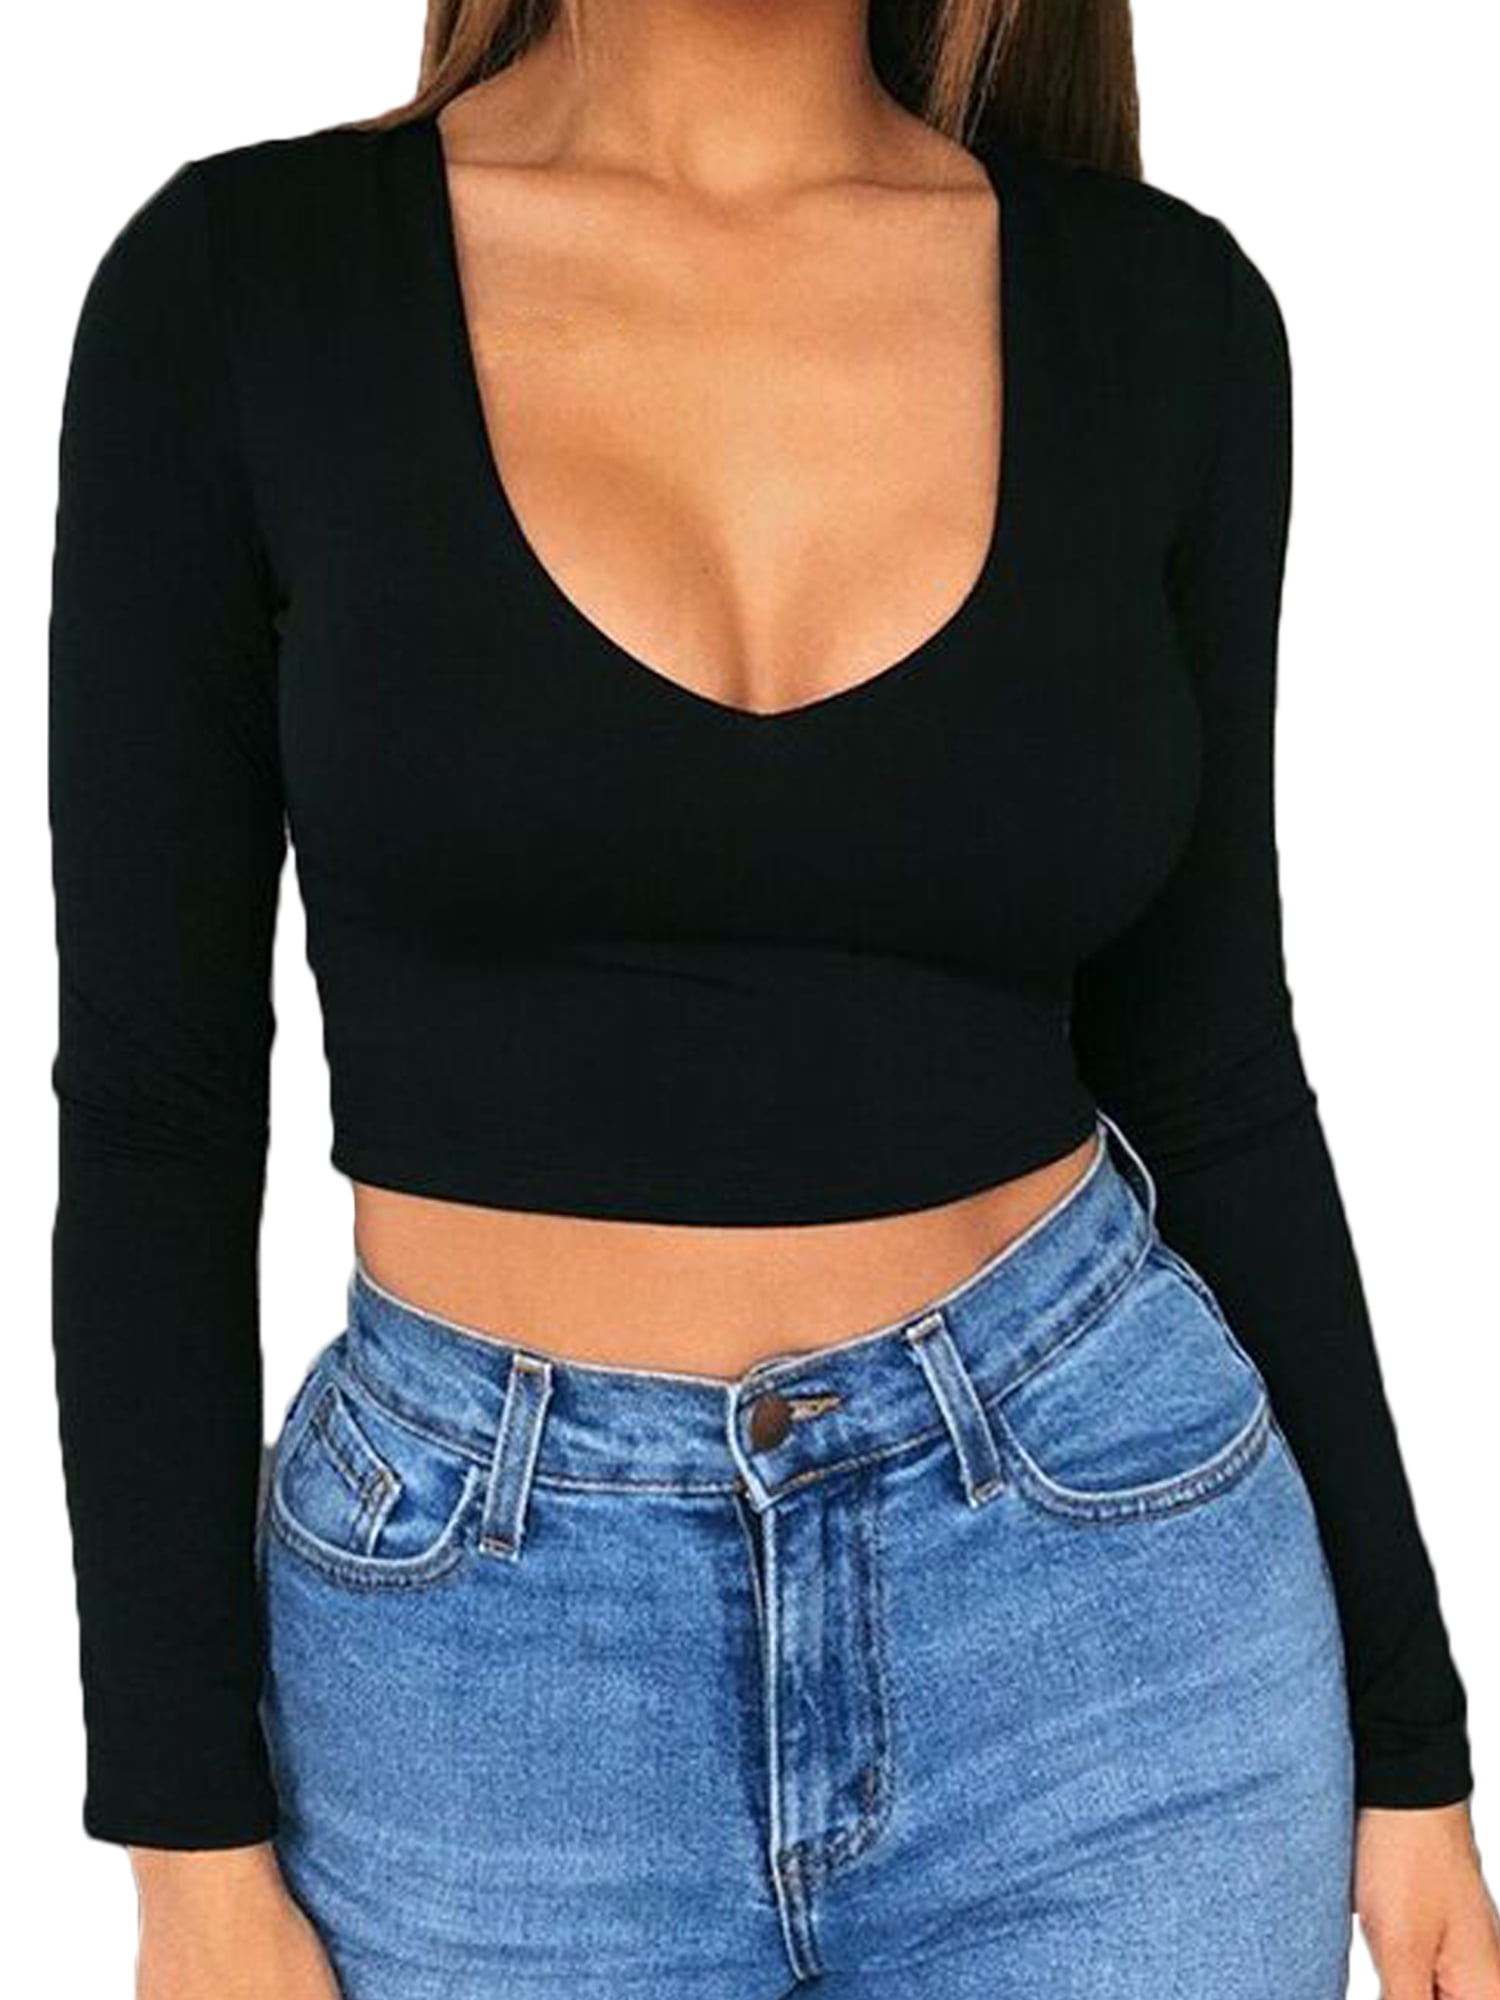 FeMereina Womens V-neck Crop Top Long Sleeve Shirt Blouse Sweater Vest ...